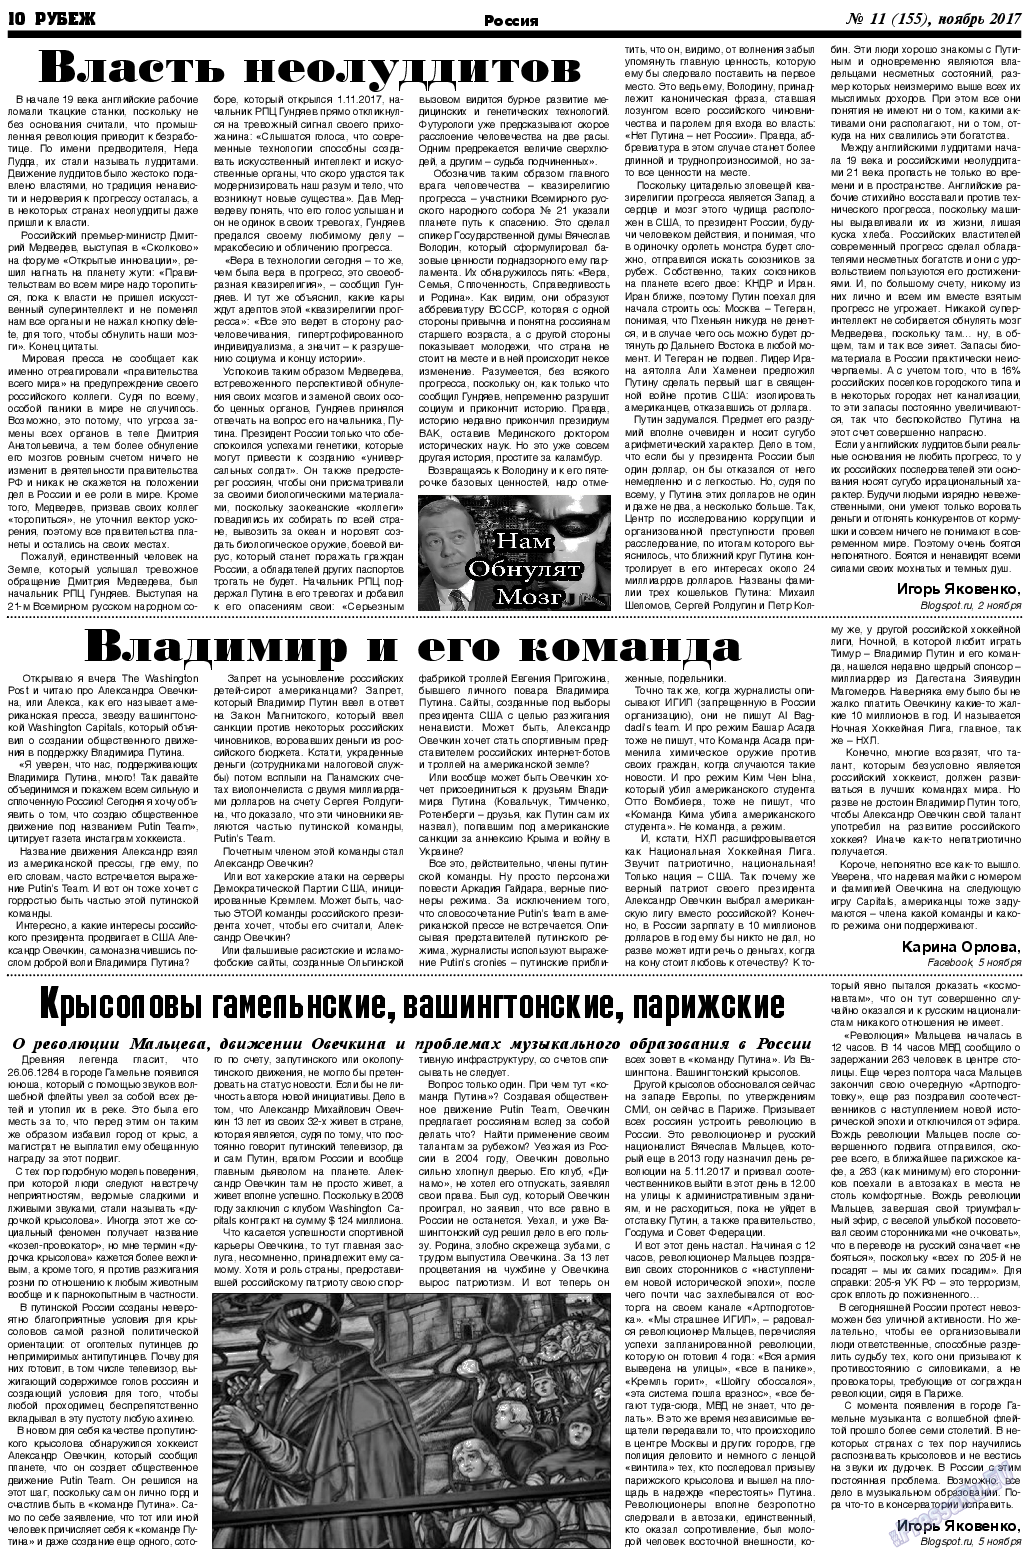 Рубеж, газета. 2017 №11 стр.10